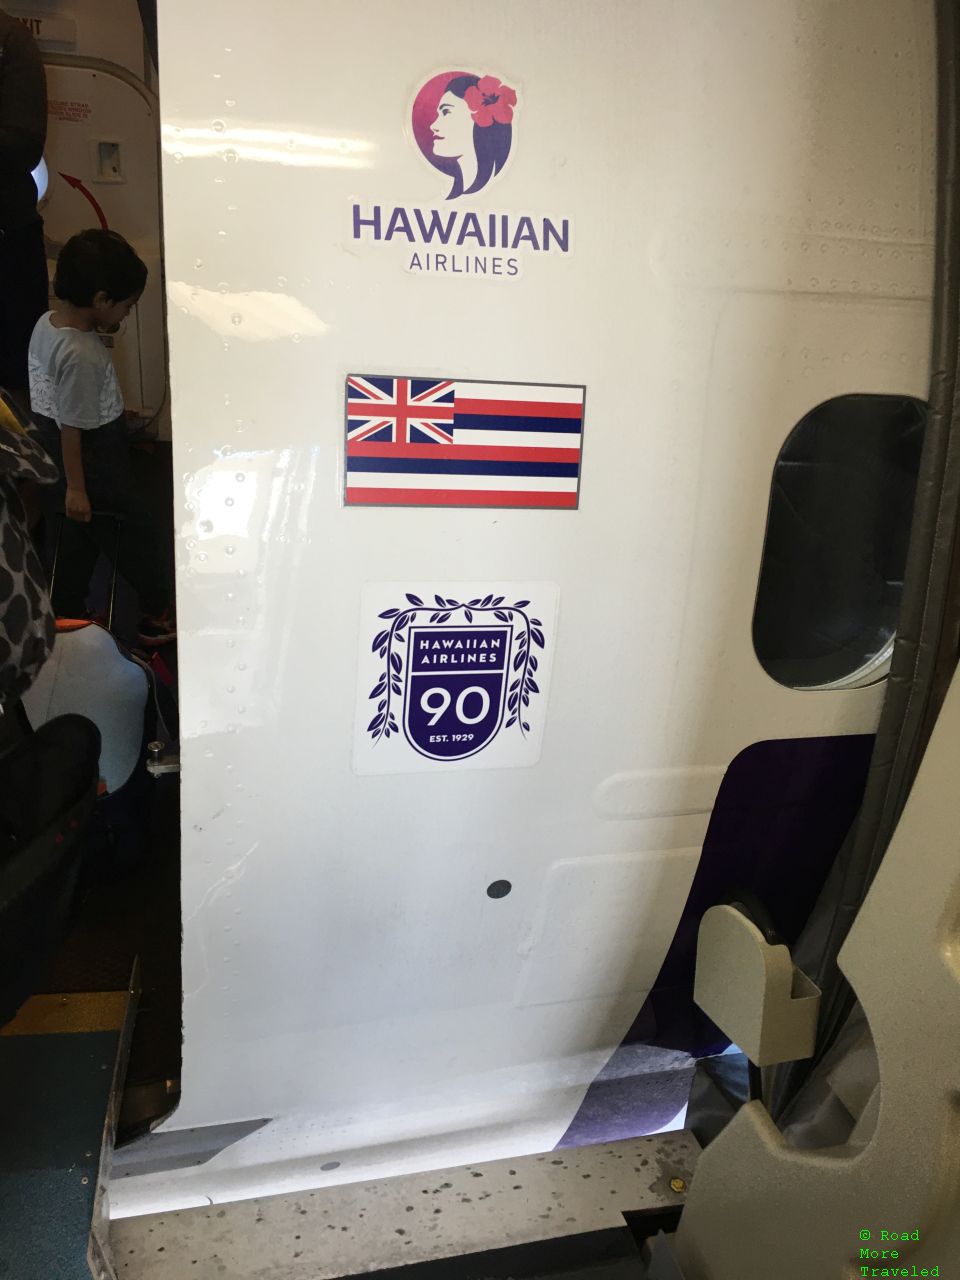 Hawaiian Airlines 90th anniversary badge